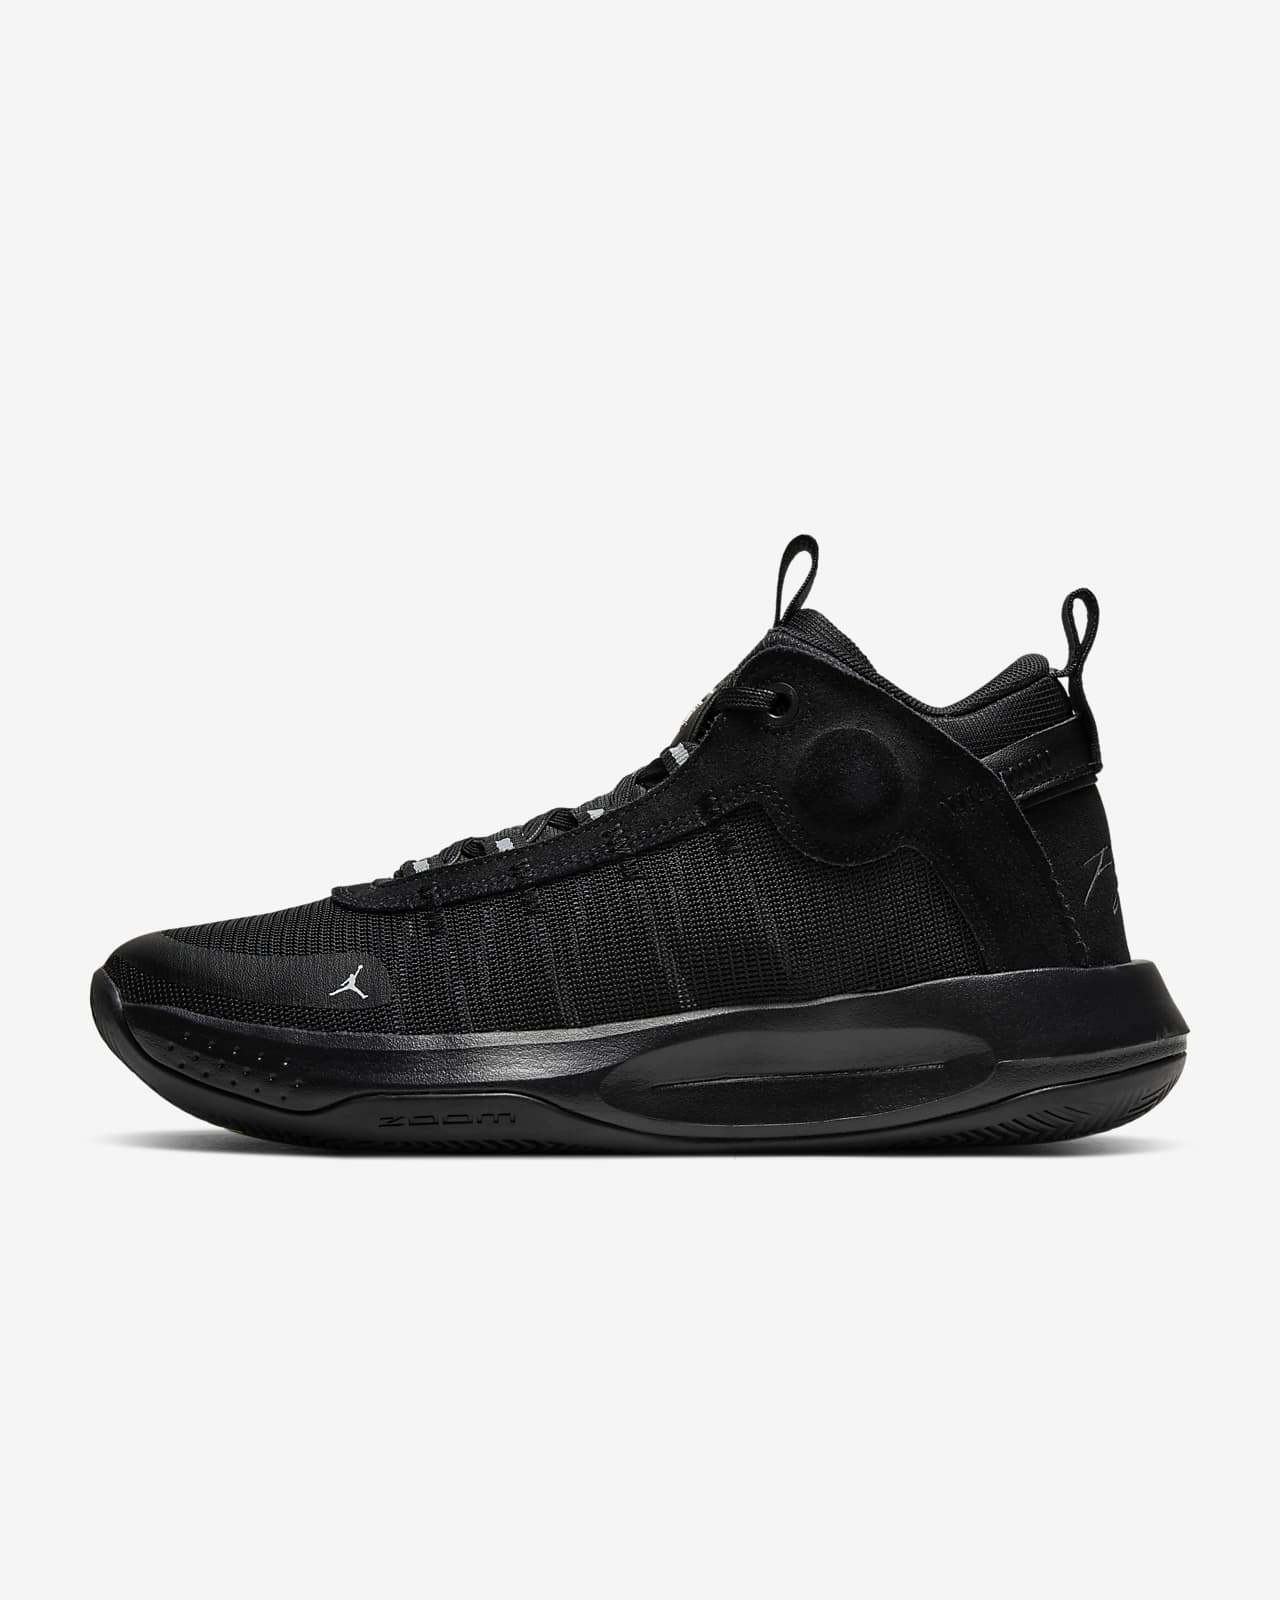 Black Air Jordan Basketball Shoes 